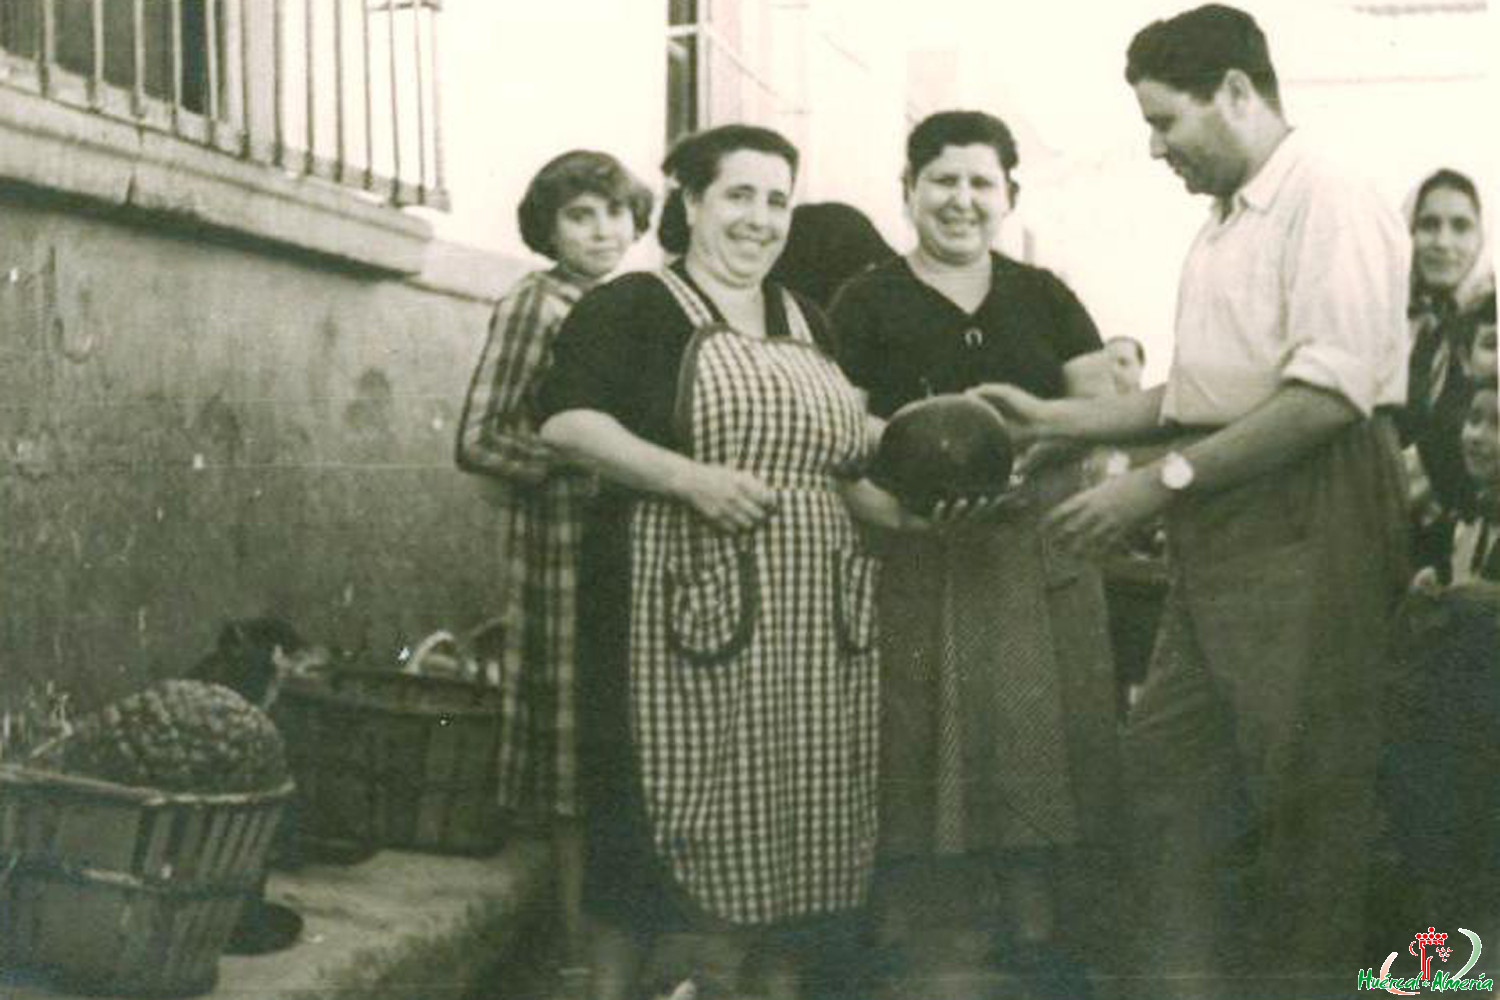 Vendiendo en la plaza.1955